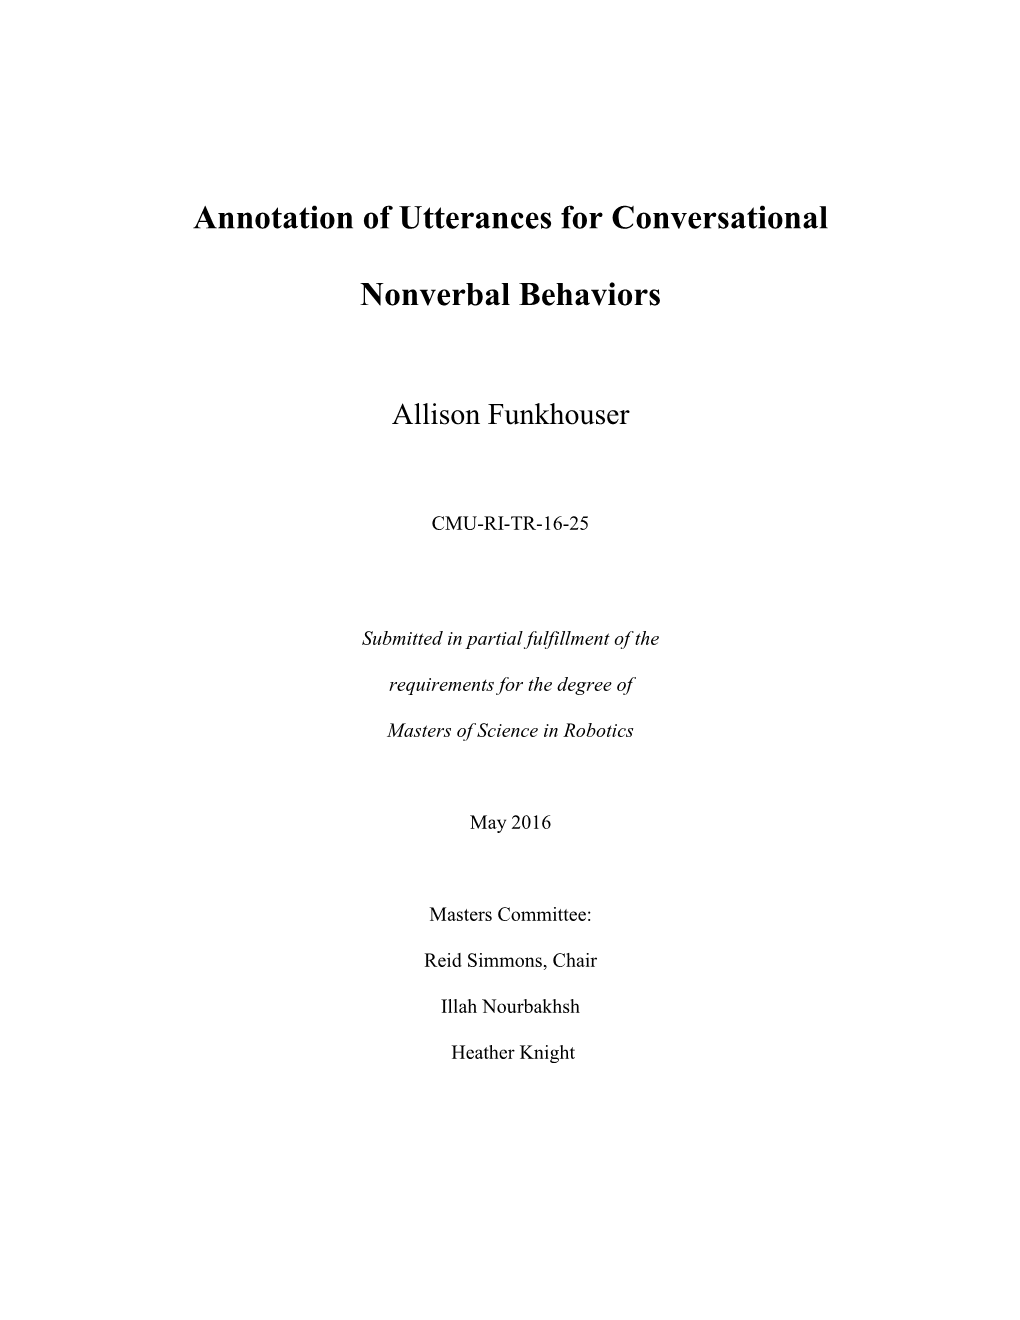 Annotation of Utterances for Conversational Nonverbal Behaviors